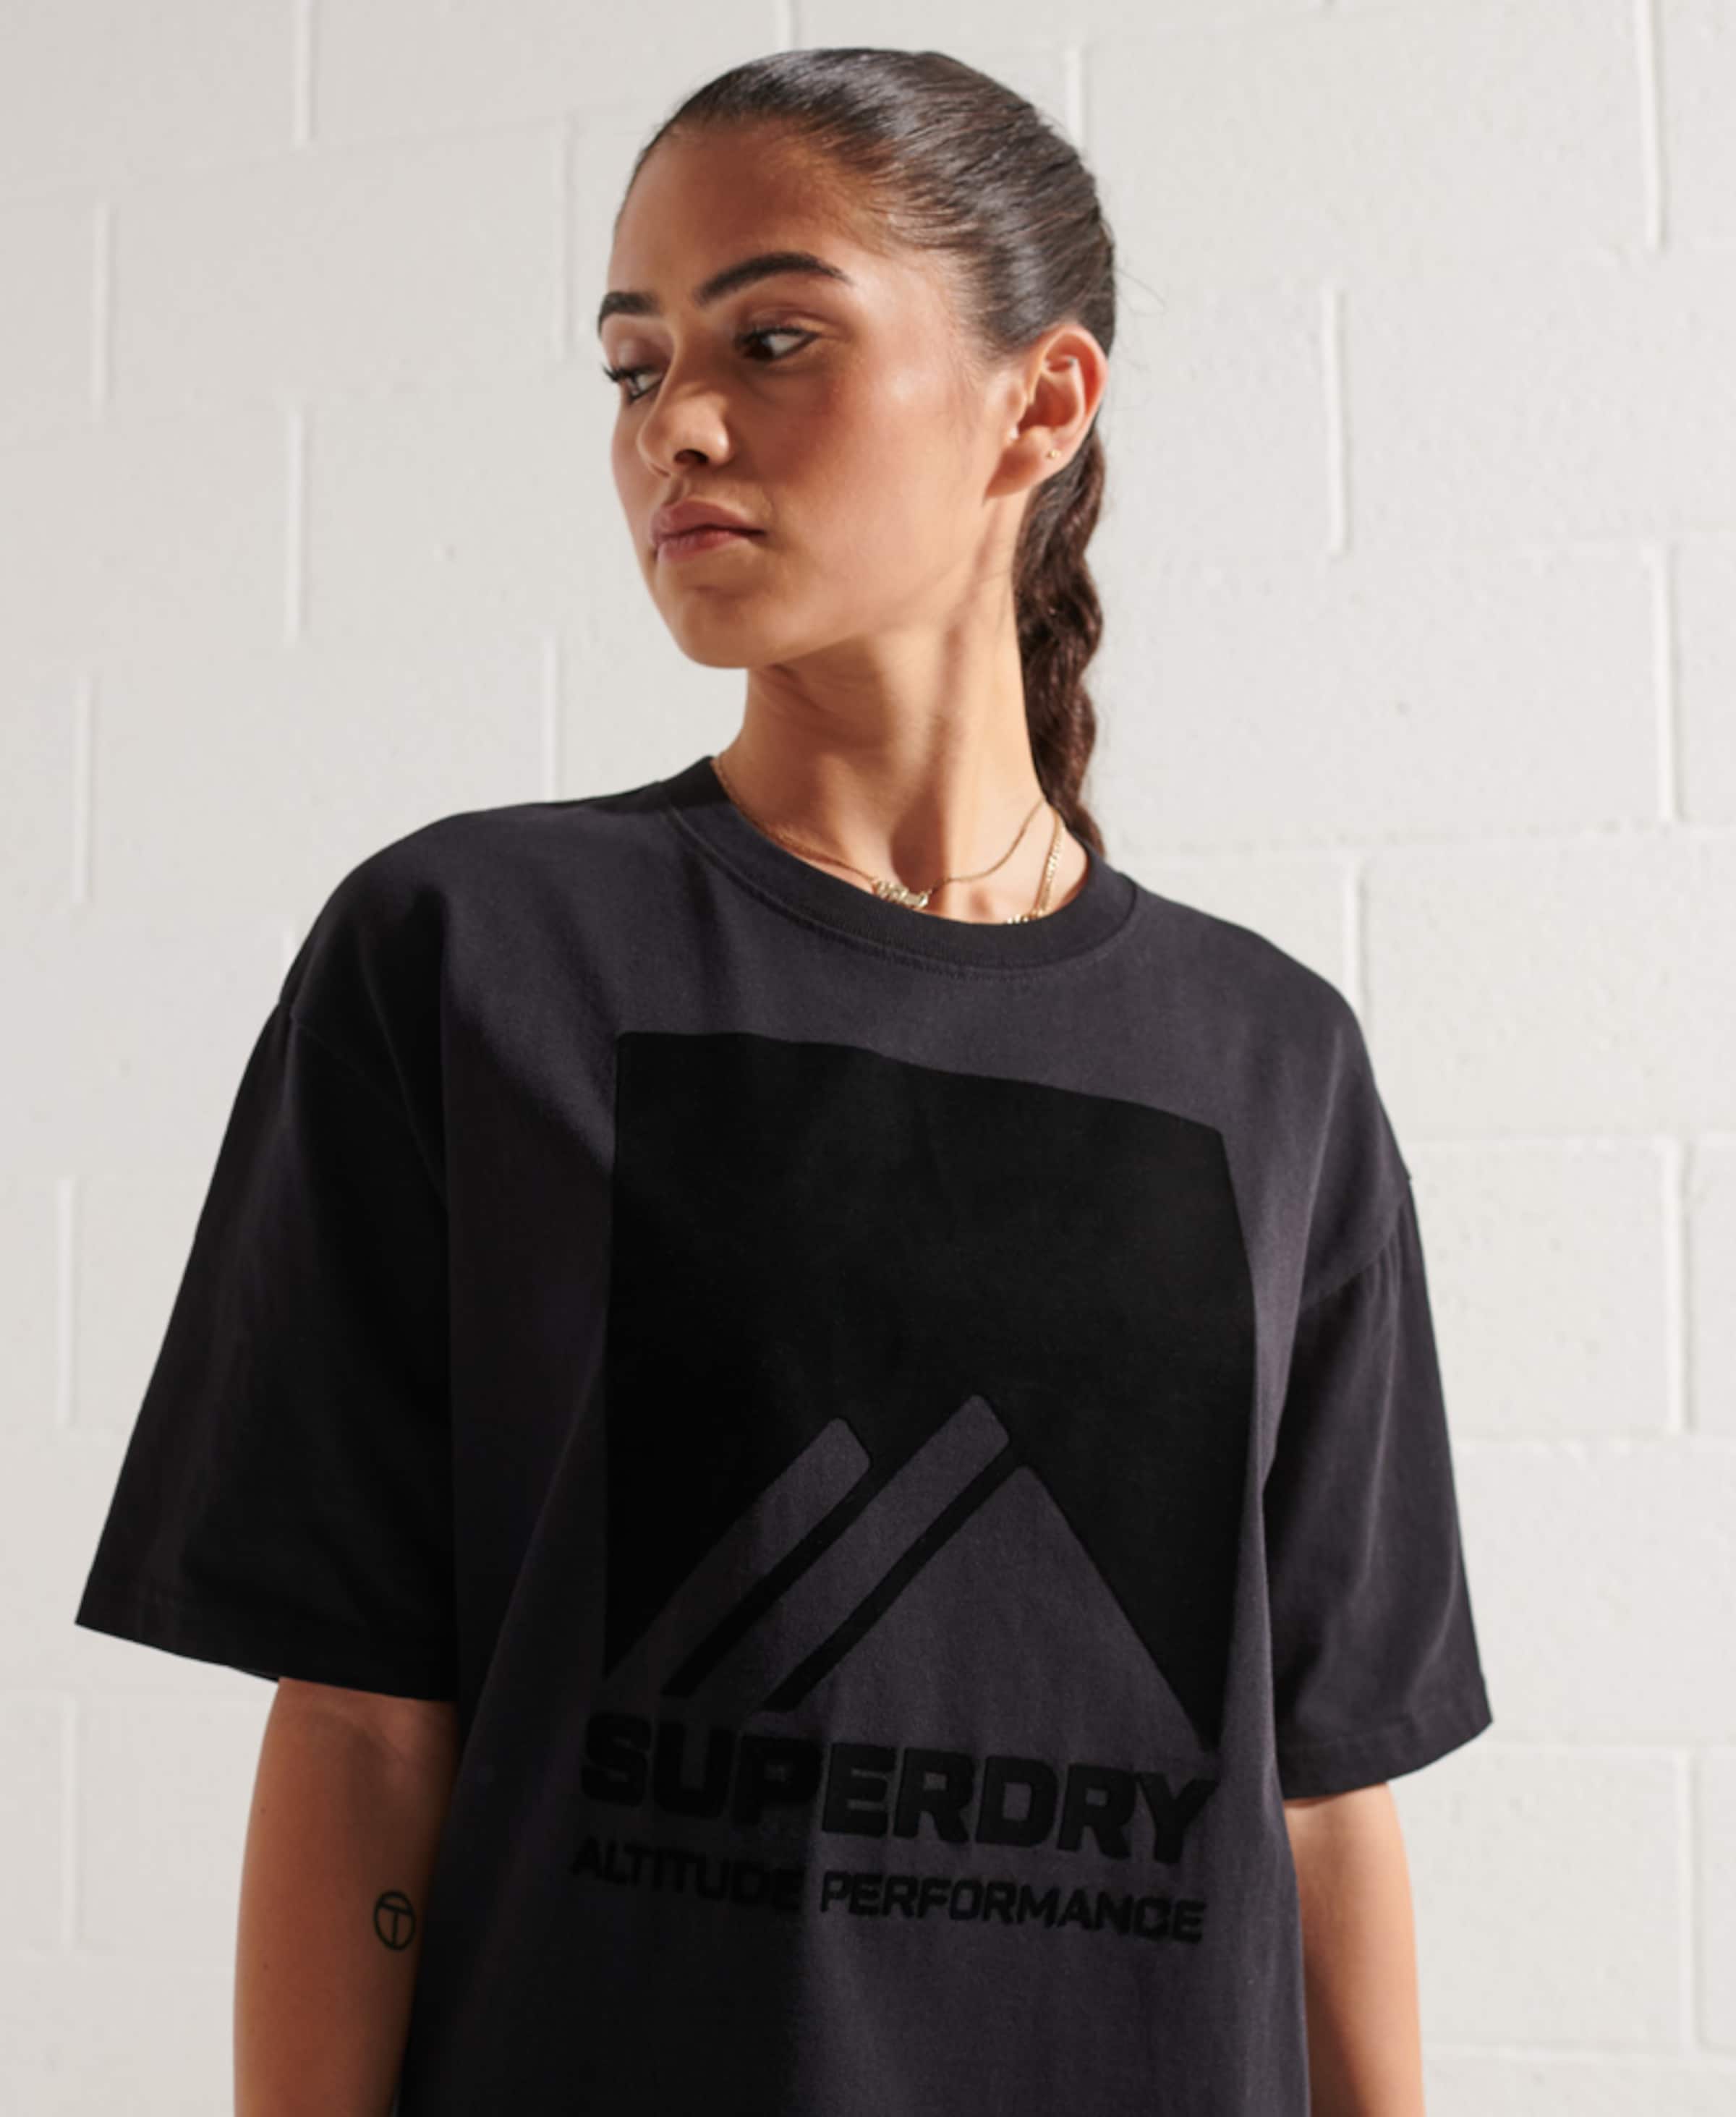 Frauen Shirts & Tops Superdry Shirt 'Mountain Sport' in Schwarz - WJ23082